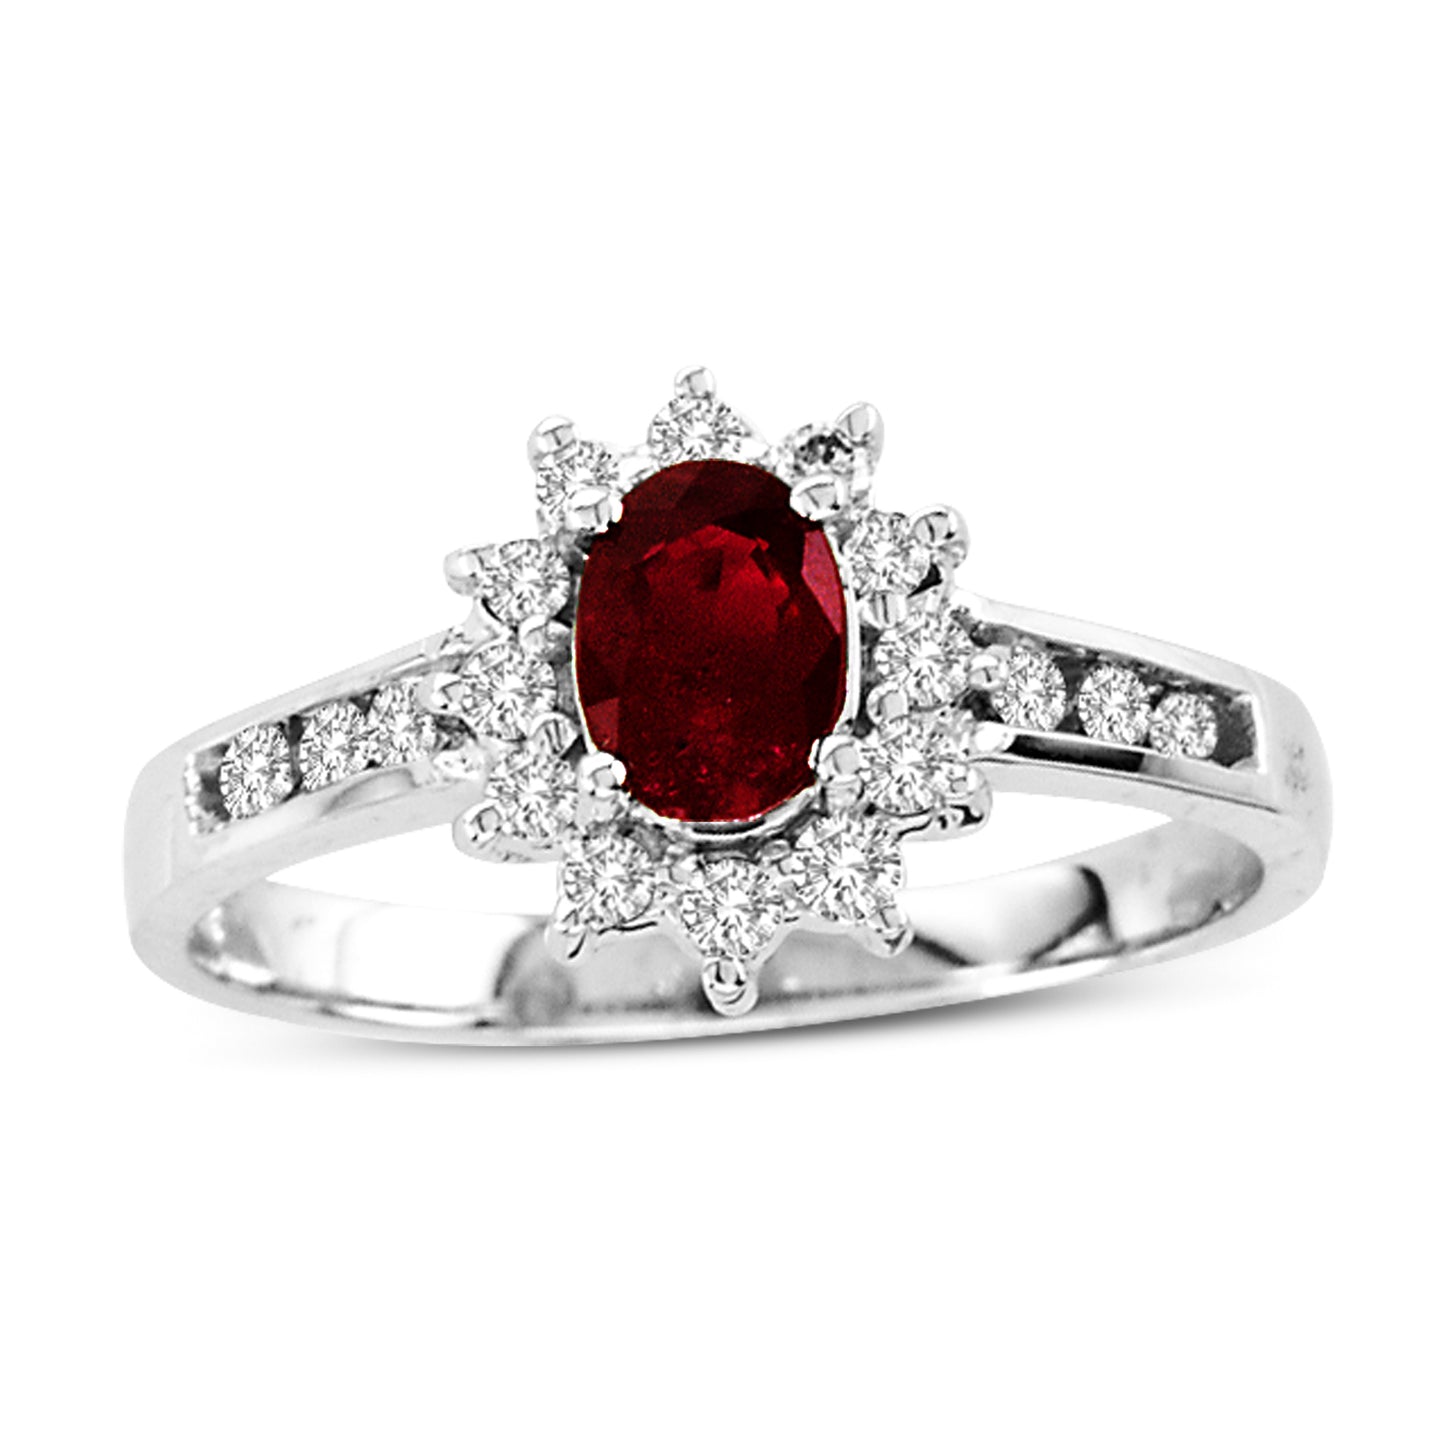 6/7ct Ruby & Diamond Ring in 14k White Gold